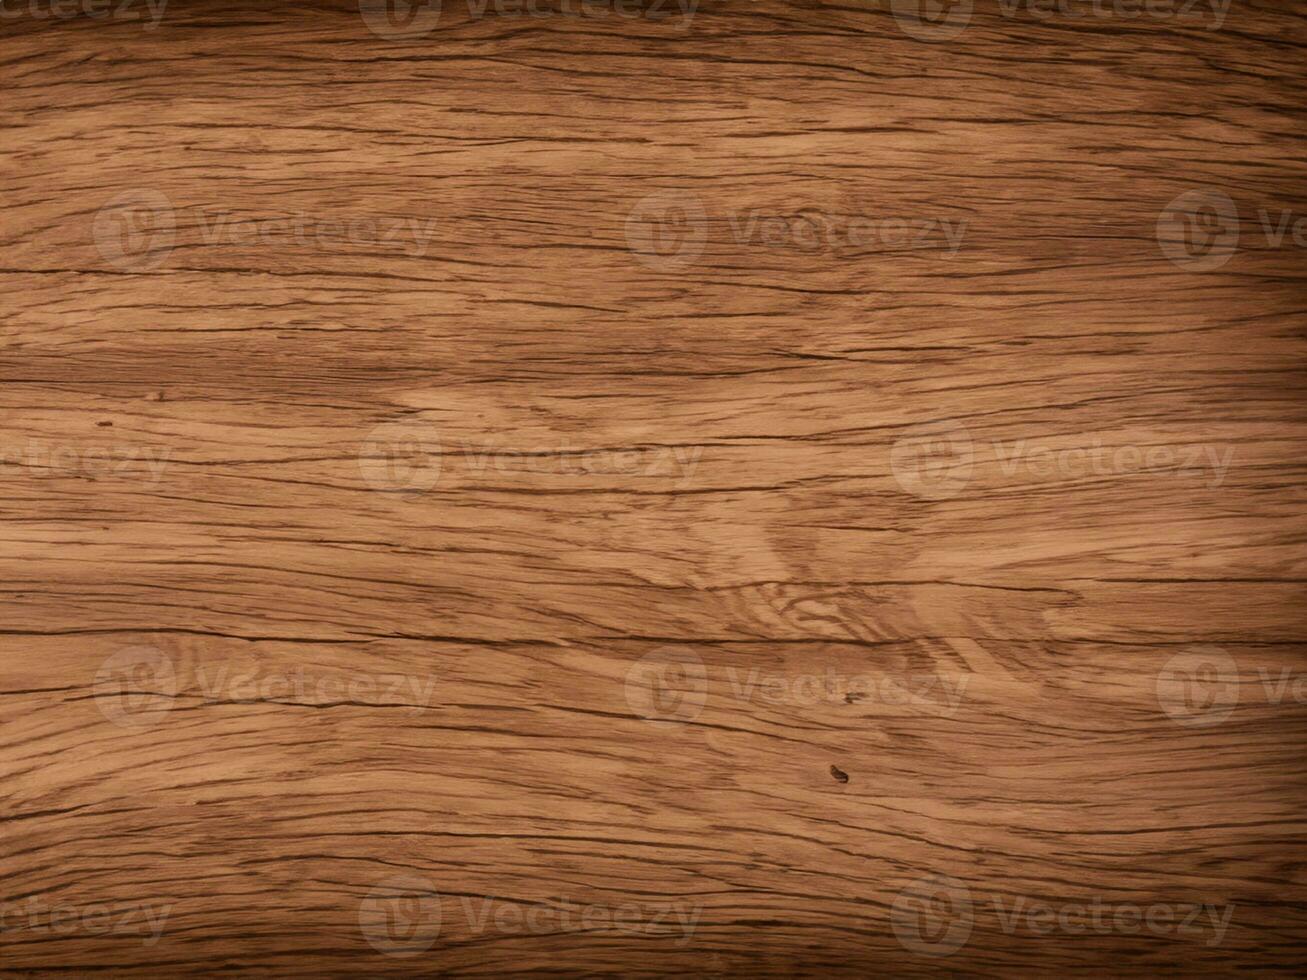 brun trä- bakgrund. naturlig trä textur. foto